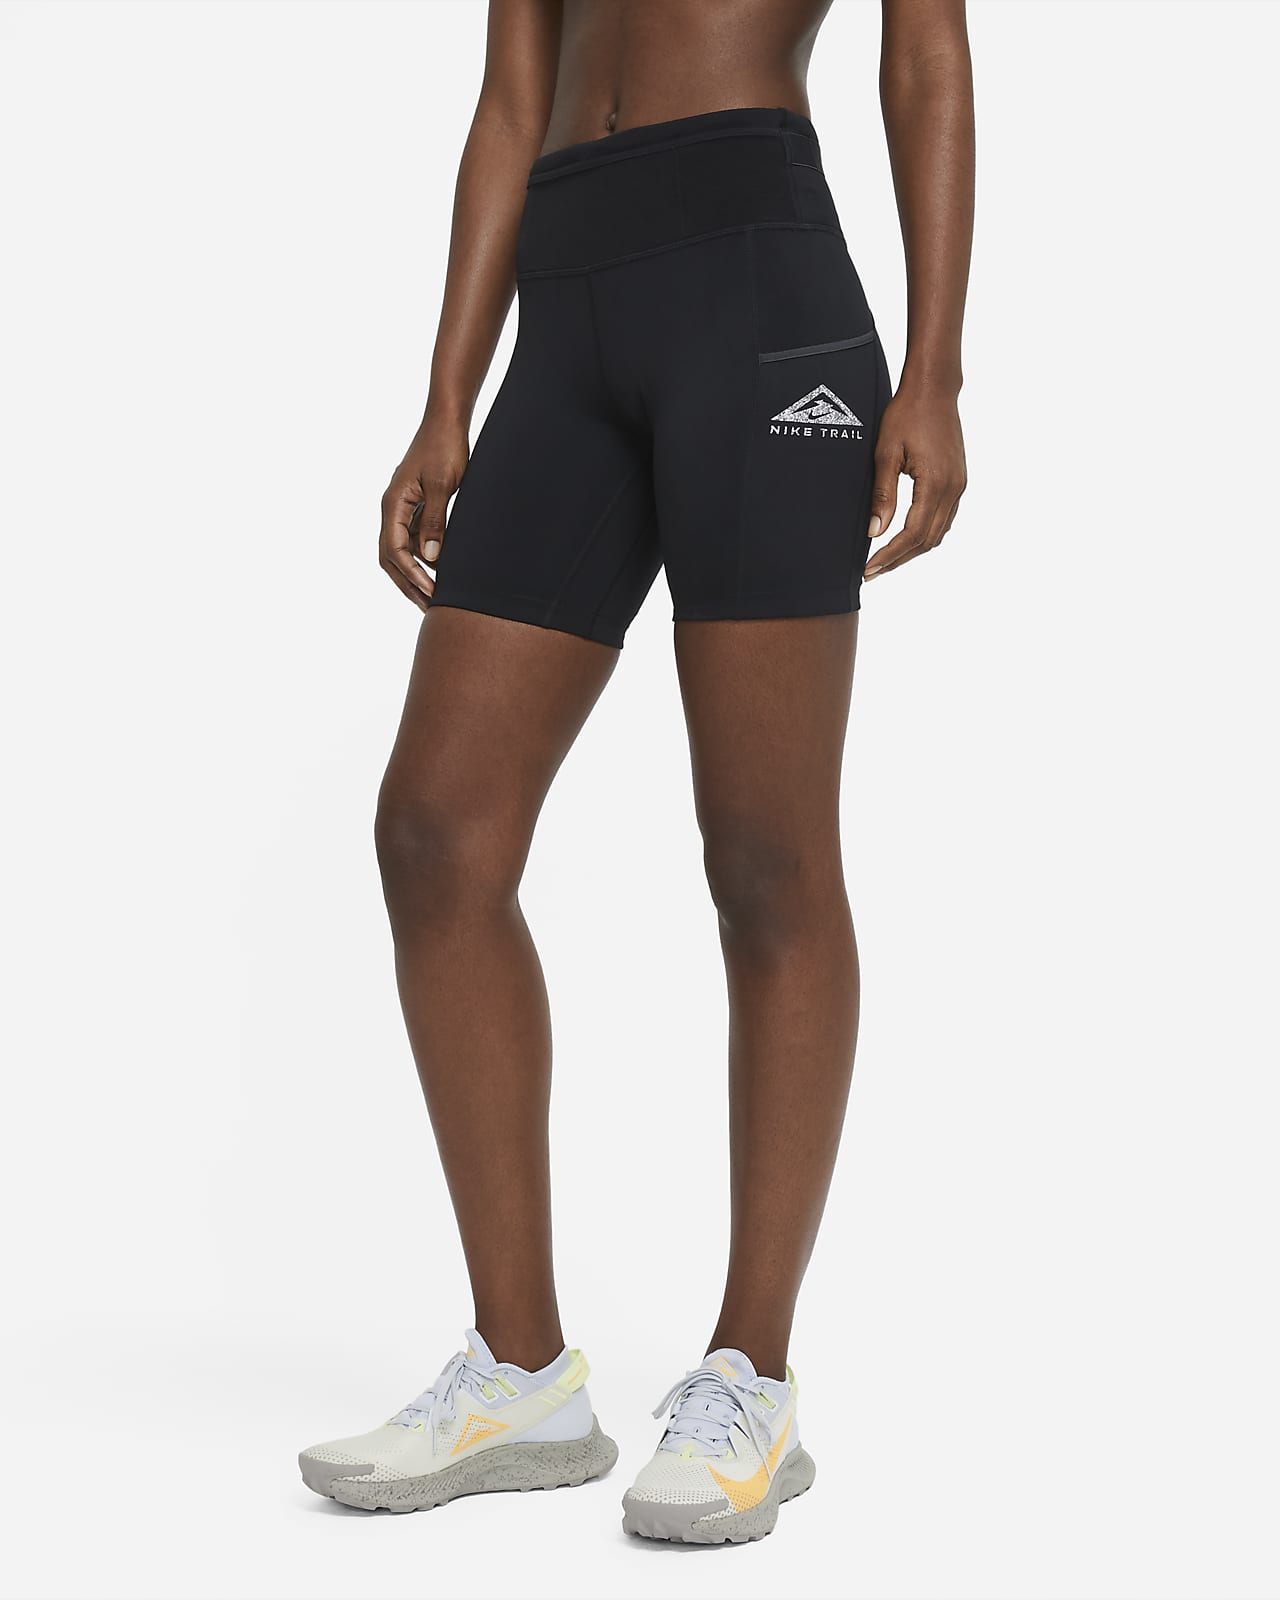 nike trail running shorts womens